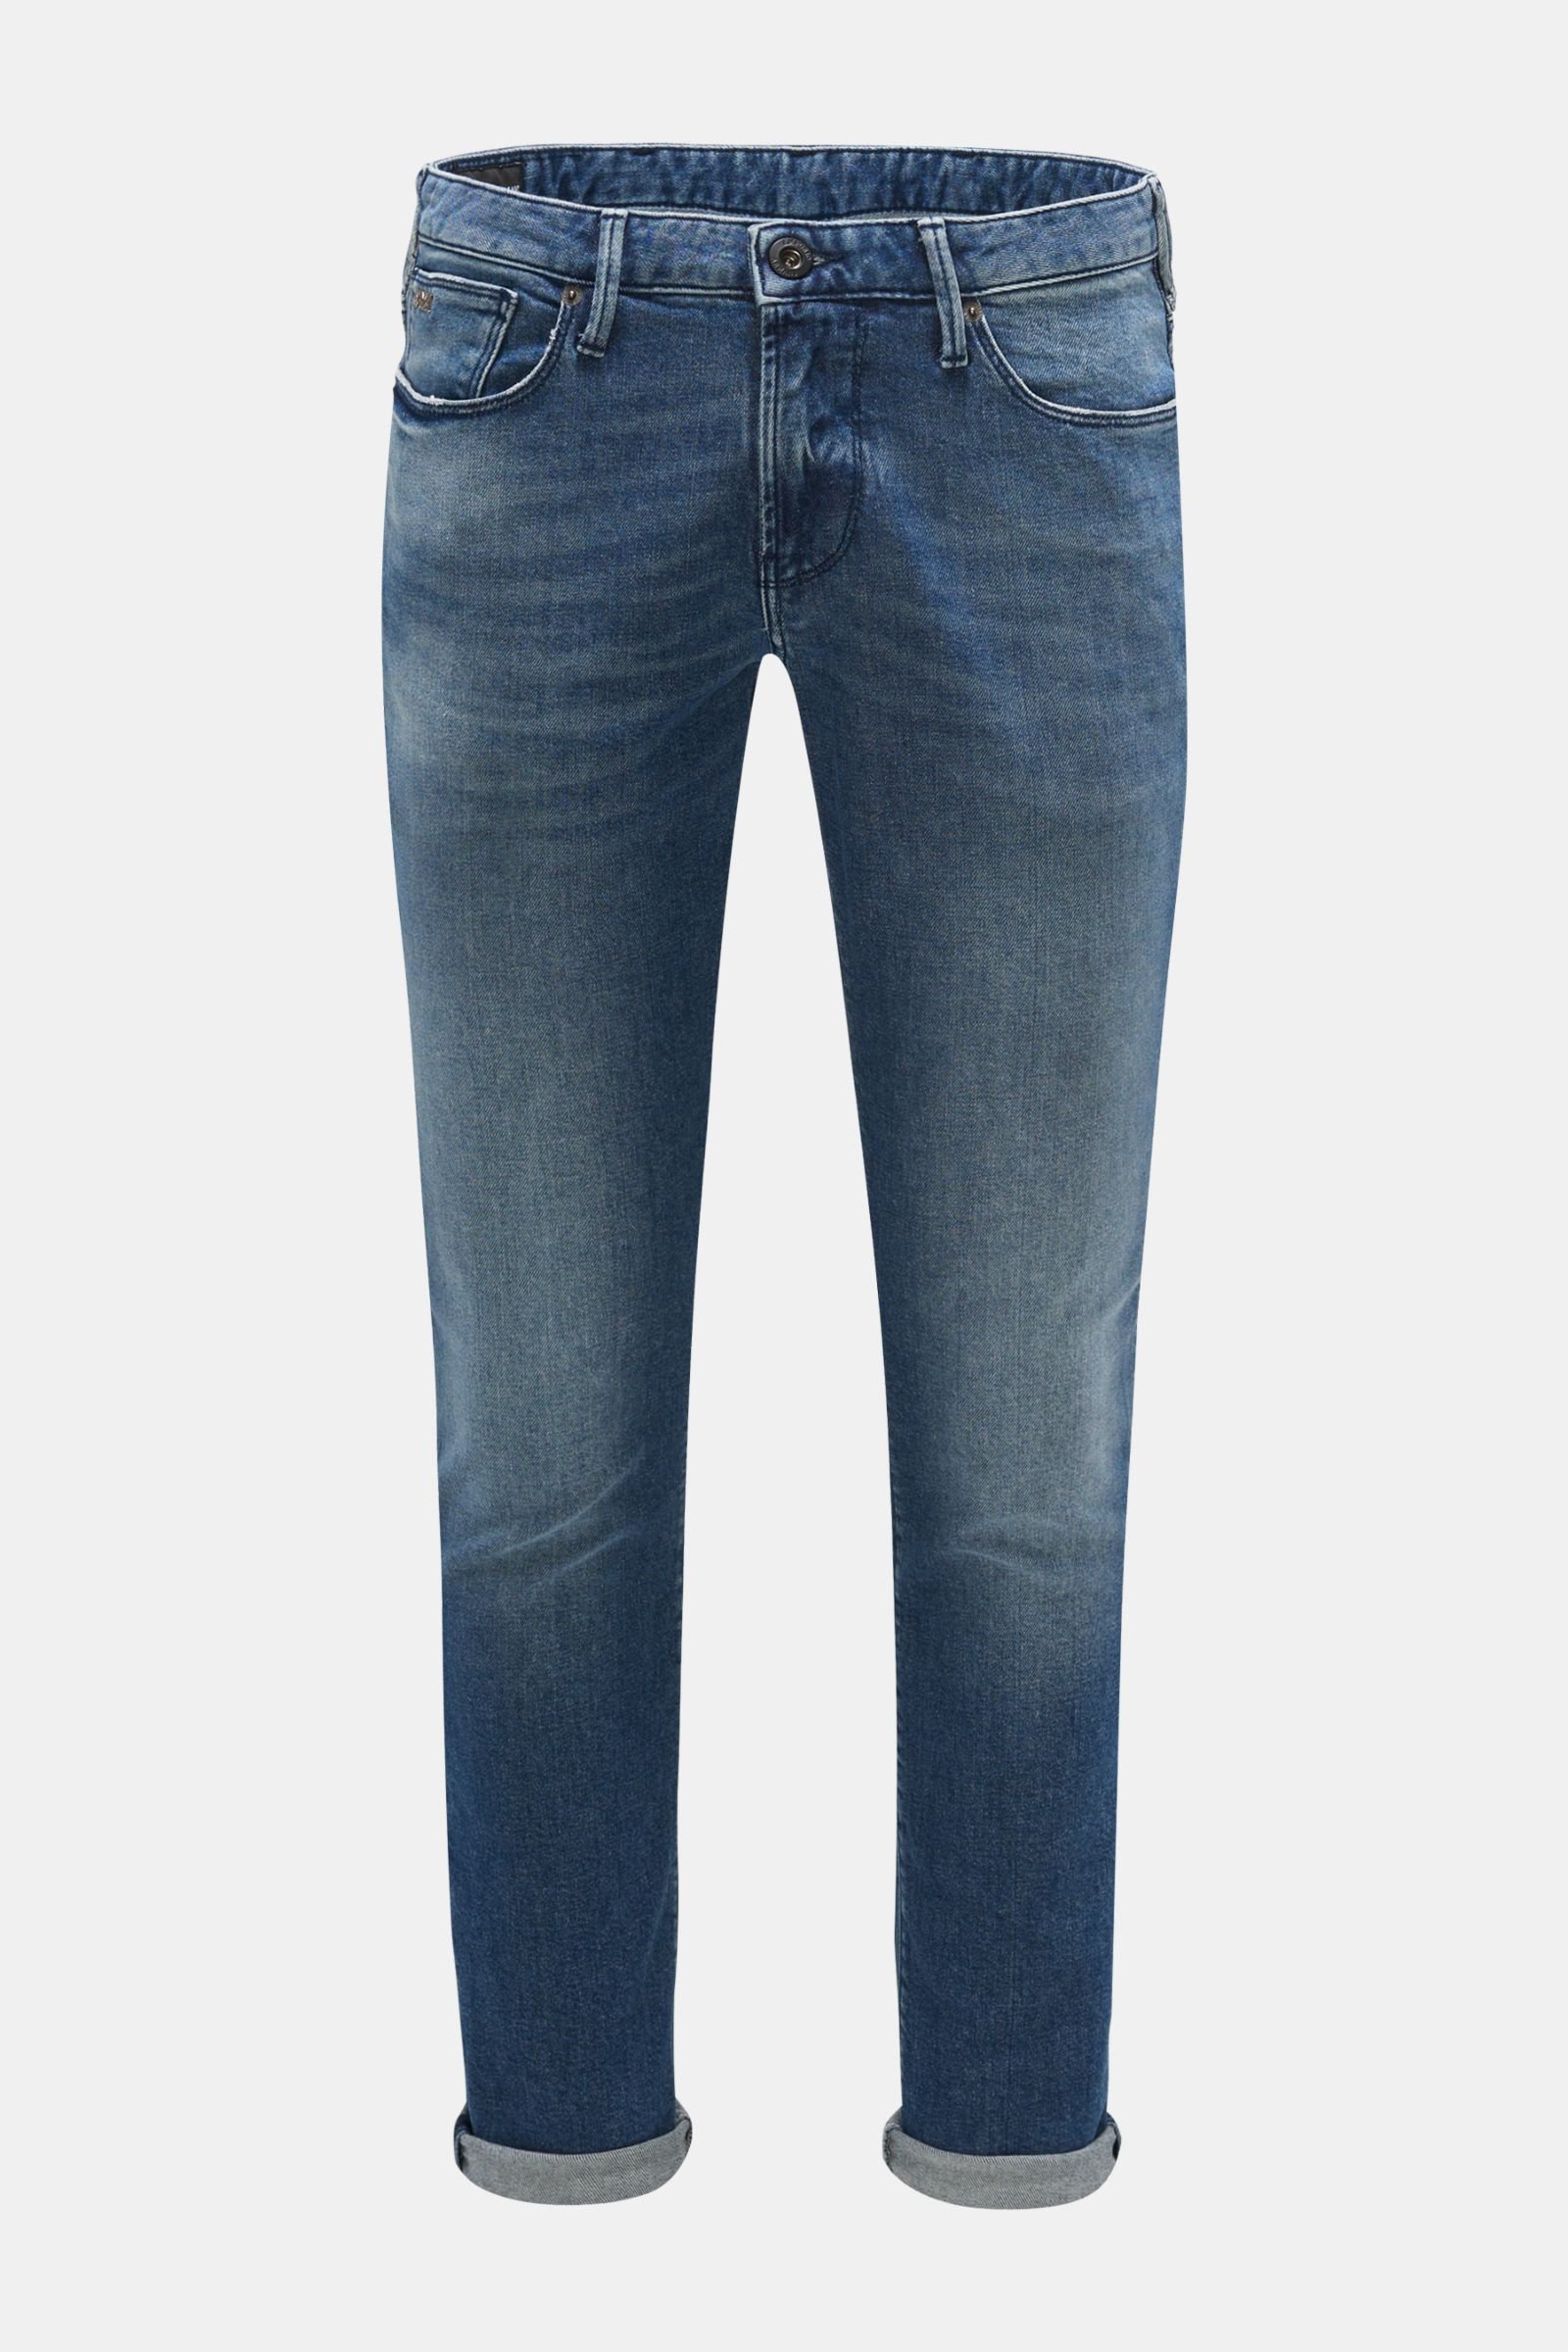 Jeans 'J06' grey-blue